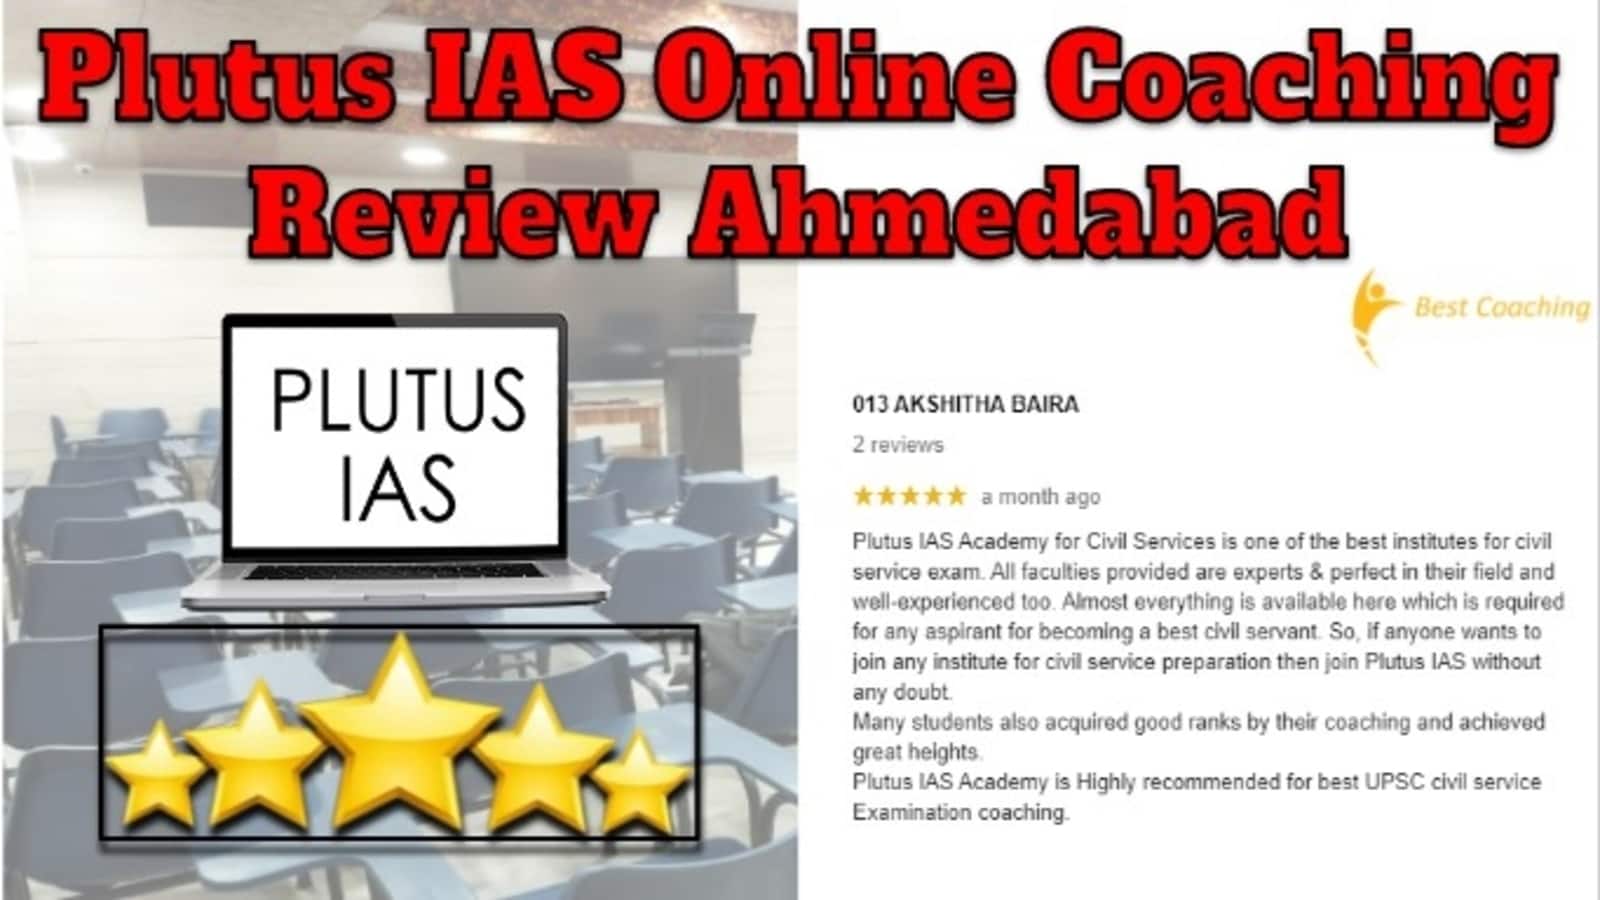 Plutus IAS Online Coaching Review Ahmedabad